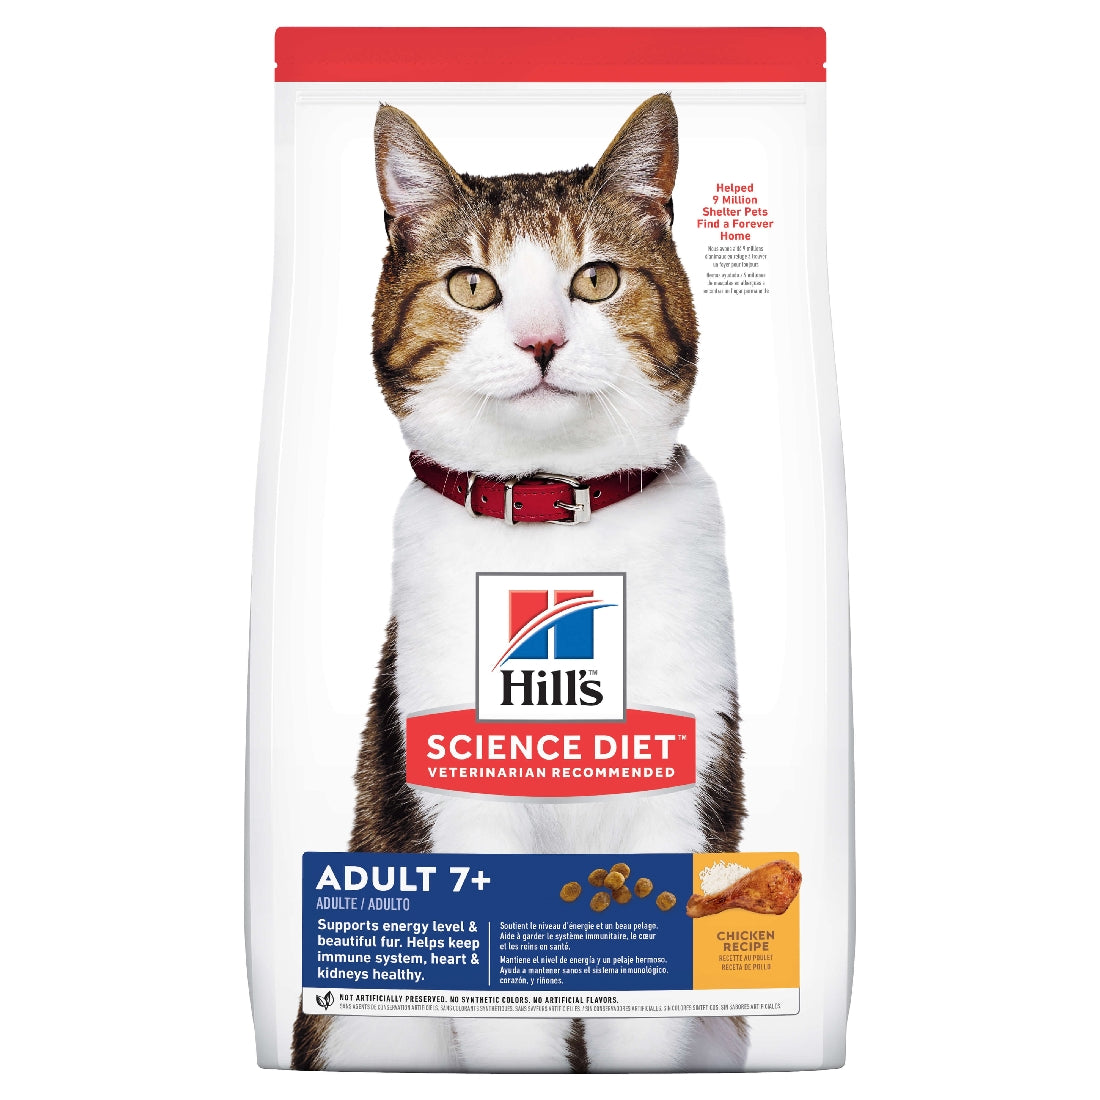 Hills Science Diet Cat Senior 7+ 3kg